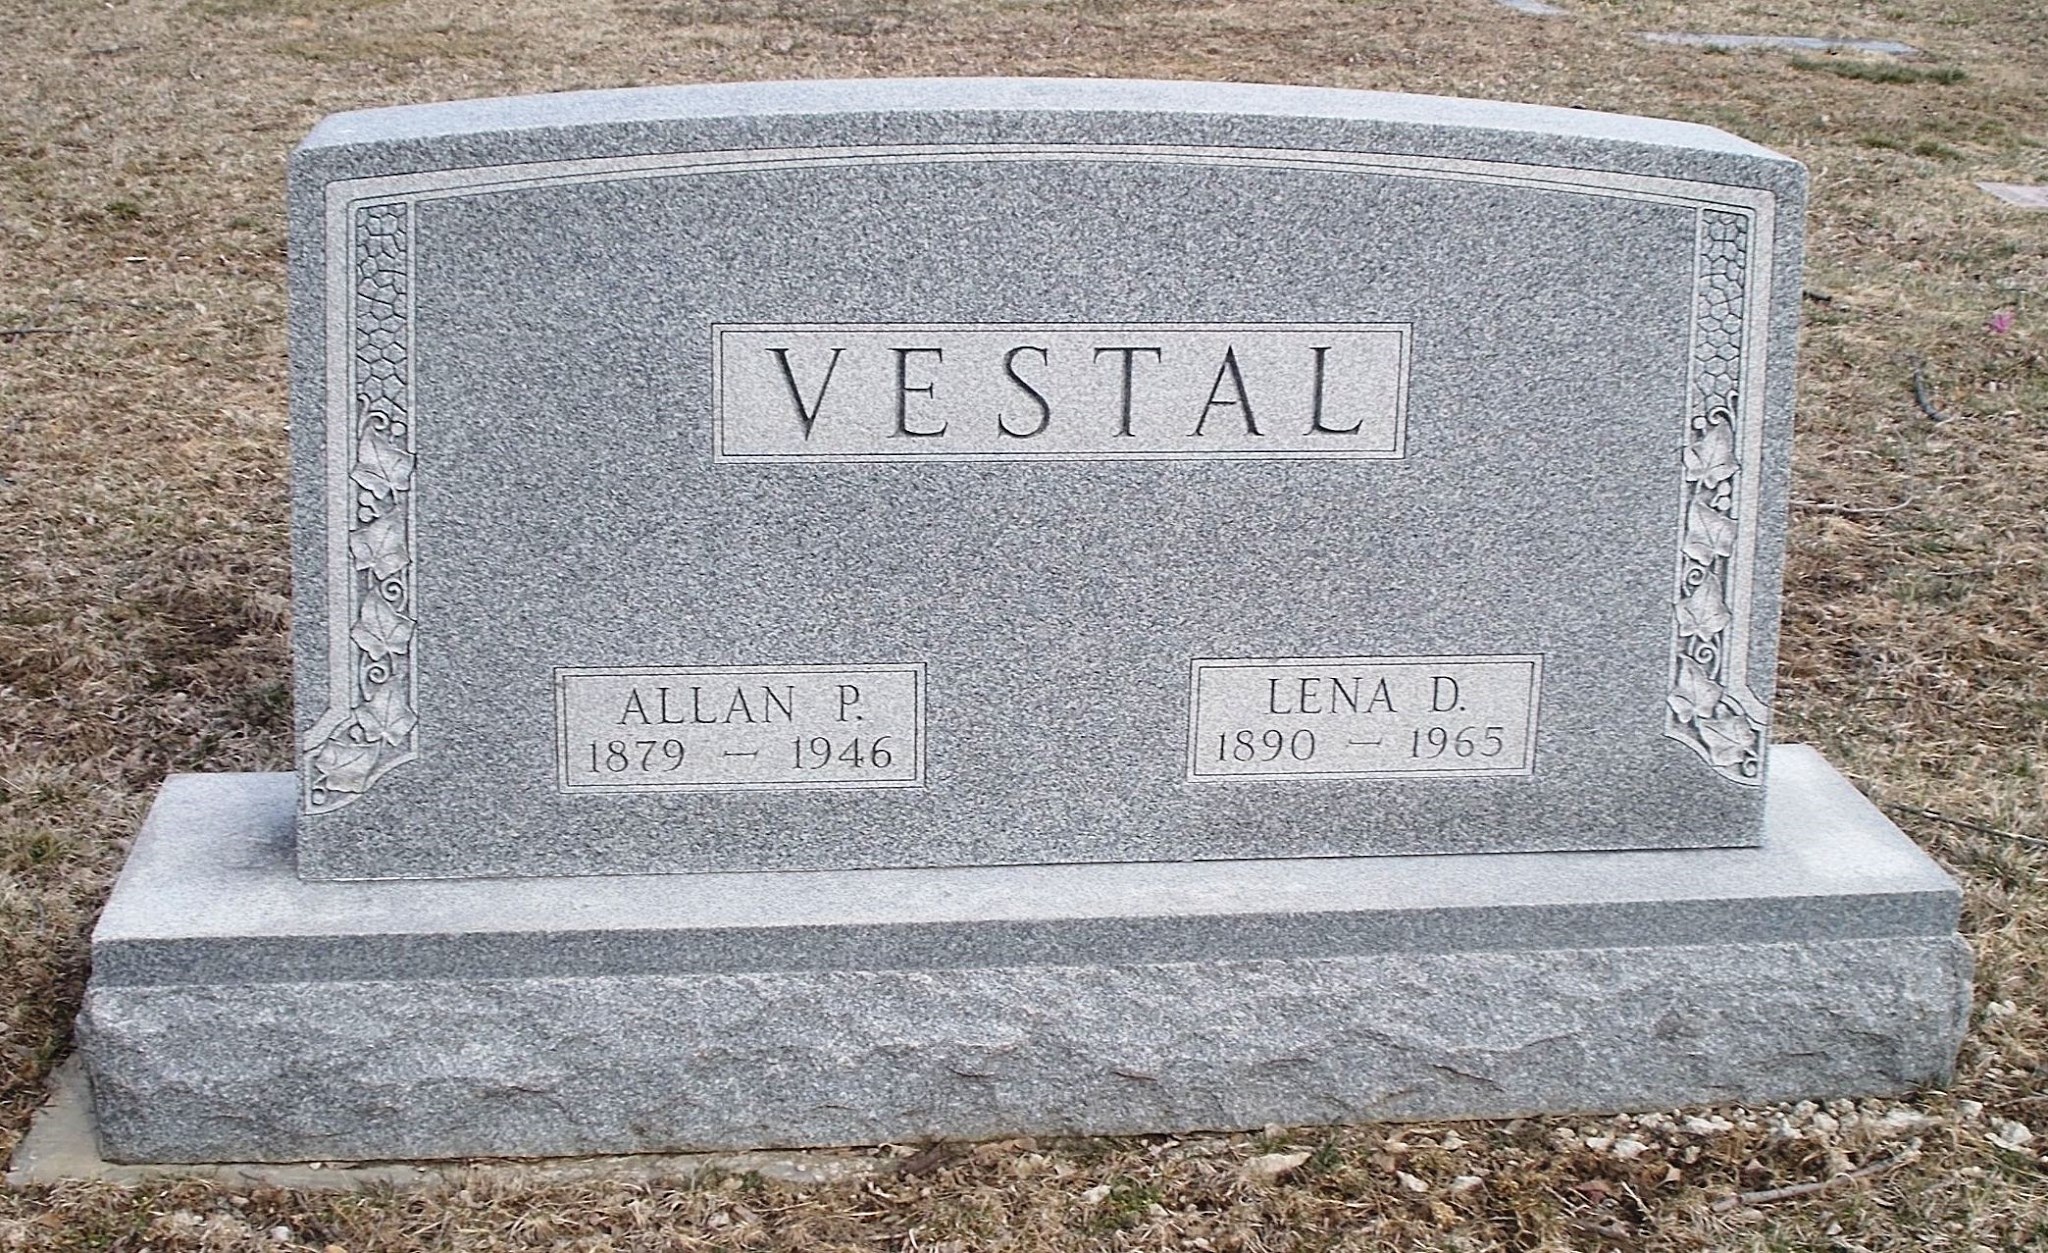 Allan P Vestal